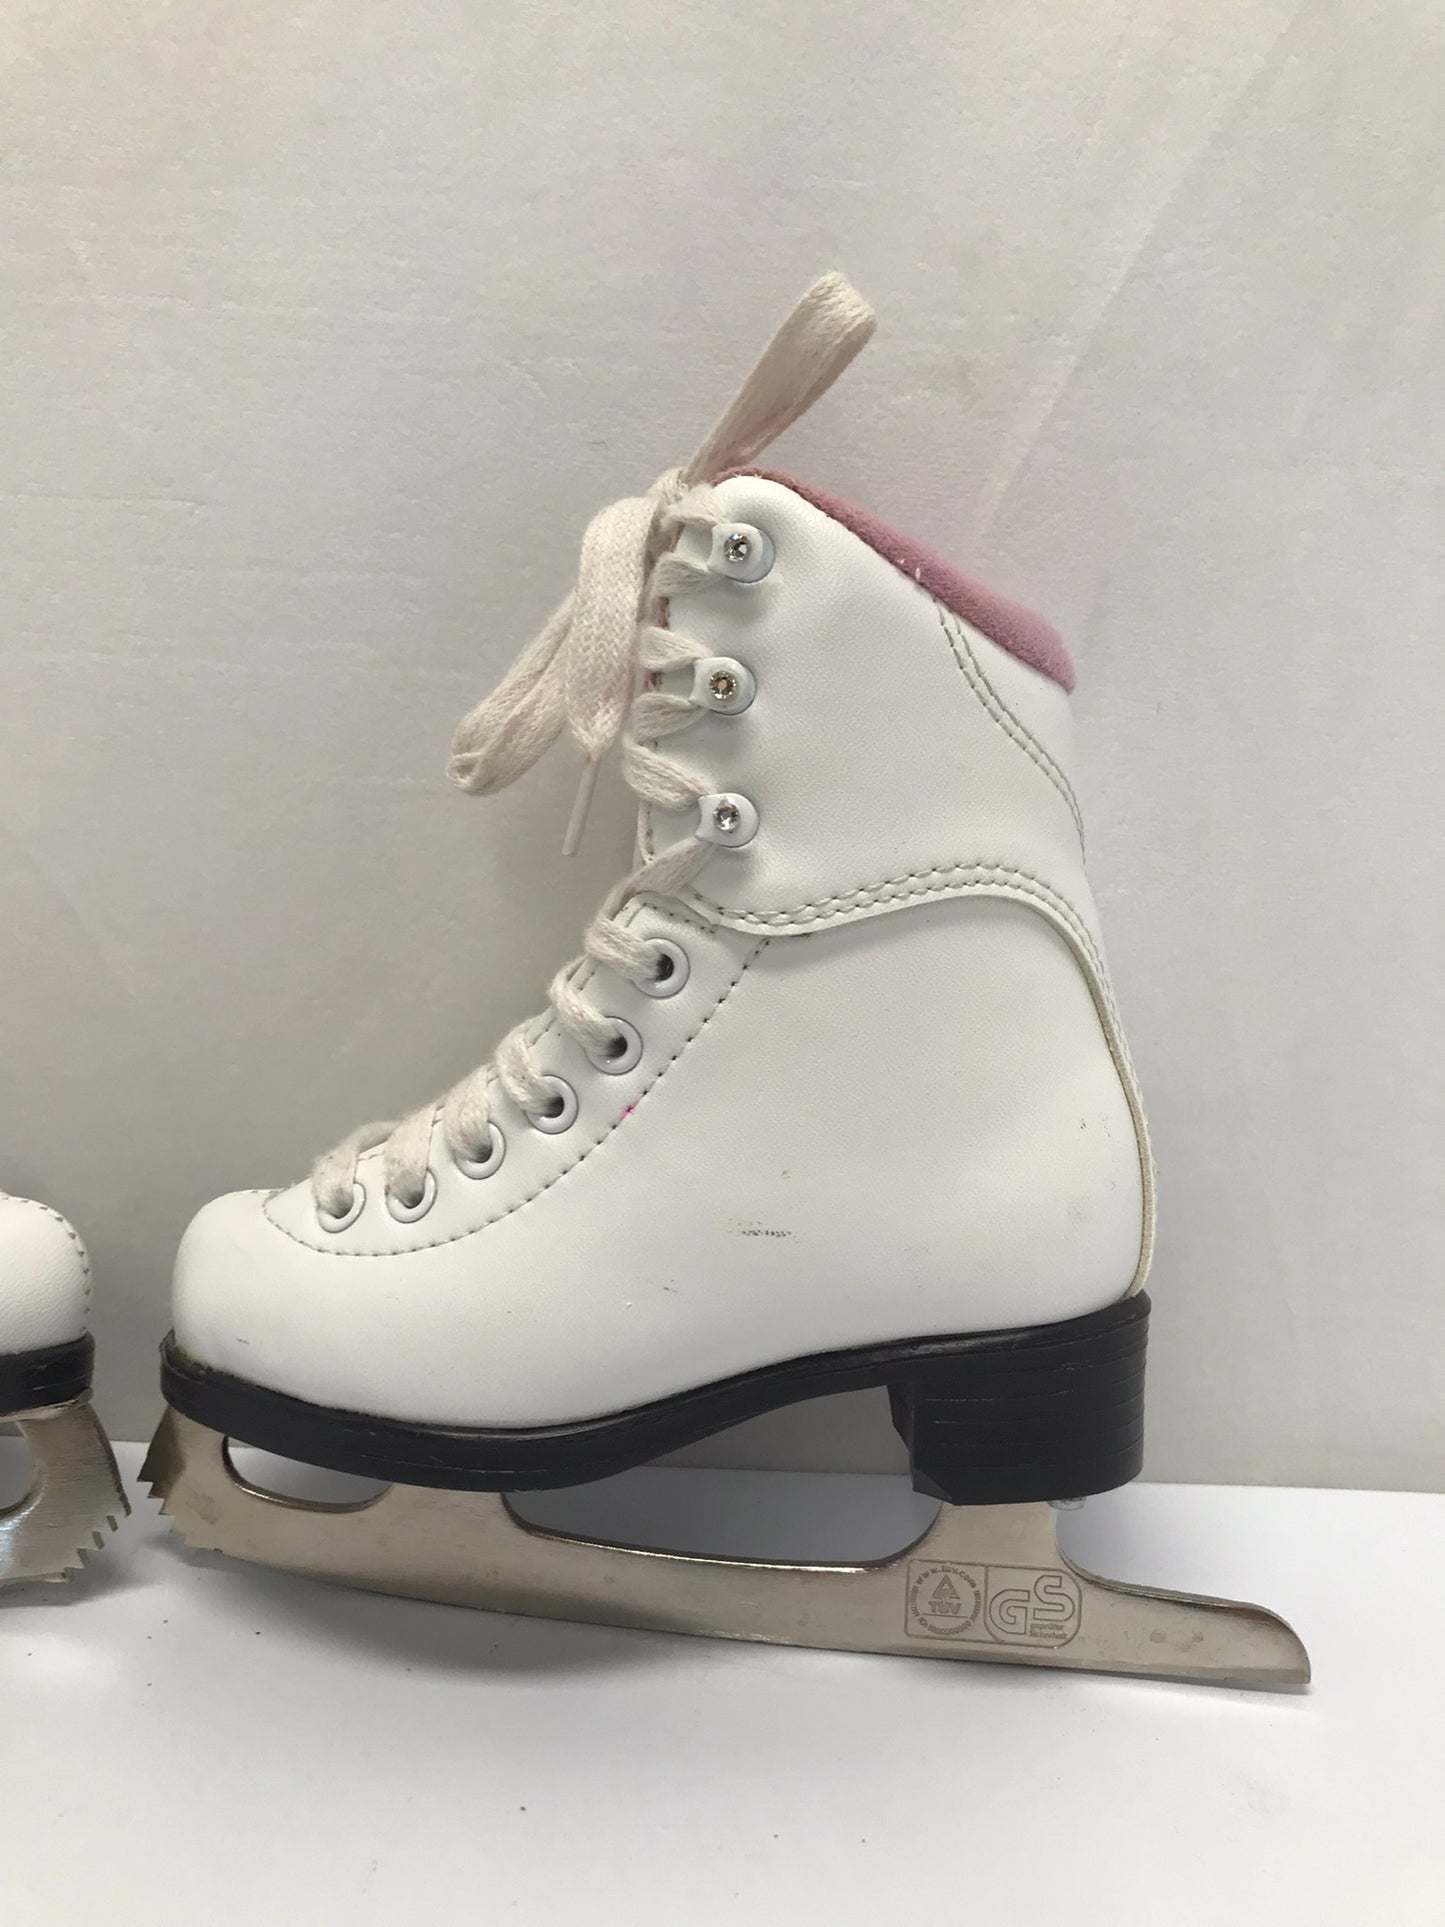 Figure Skates Child Size 9 Toddler Jackson Soft Skates White Pink As New